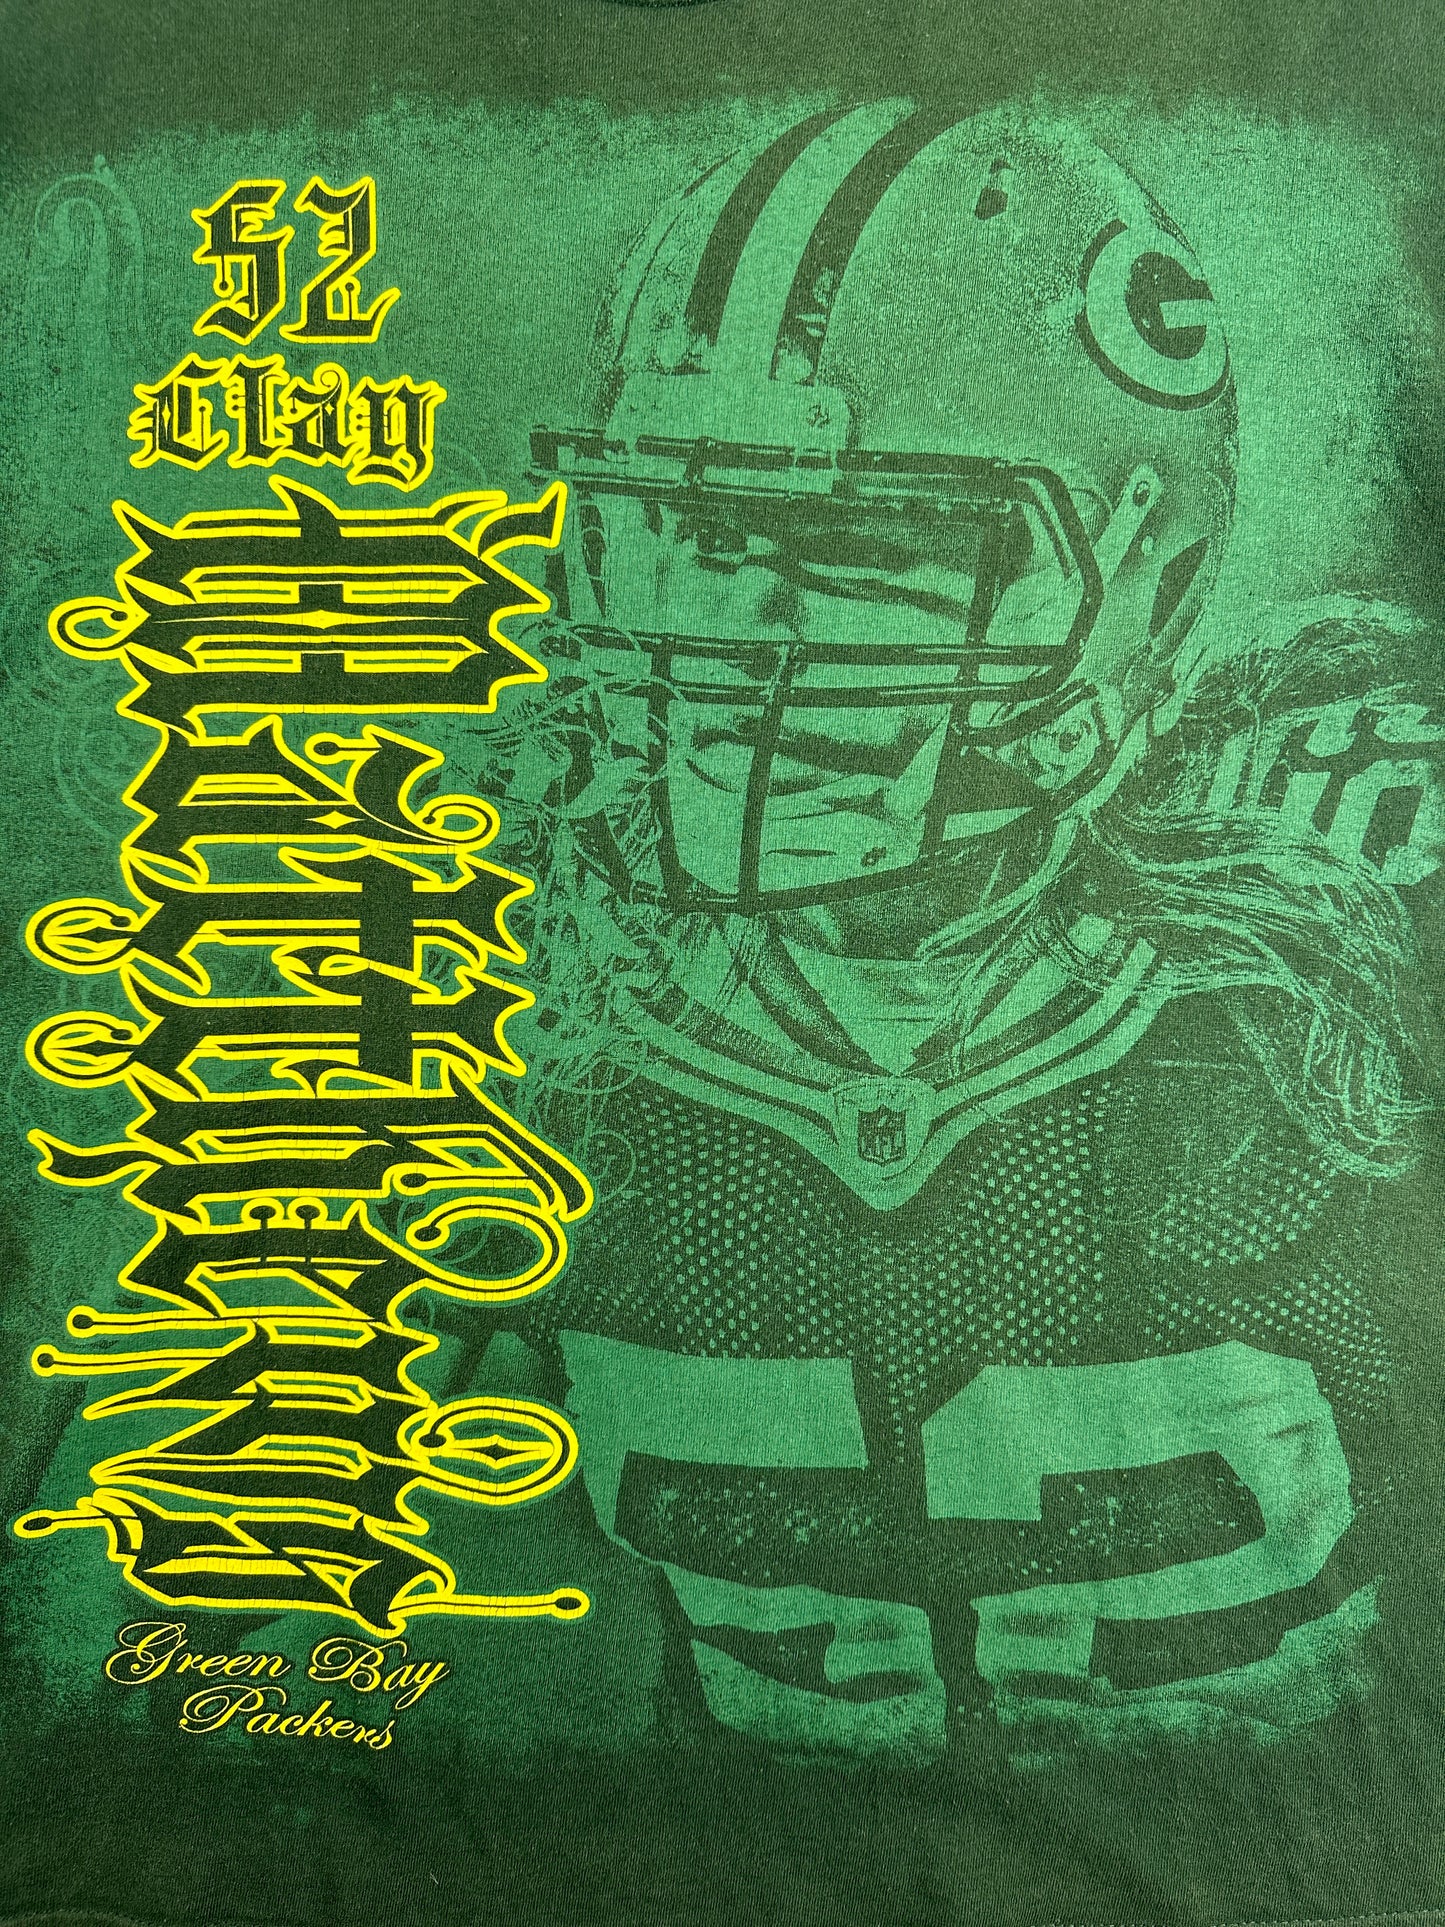 Vintage Greenbay Packers "Matthews" T-Shirt grün L